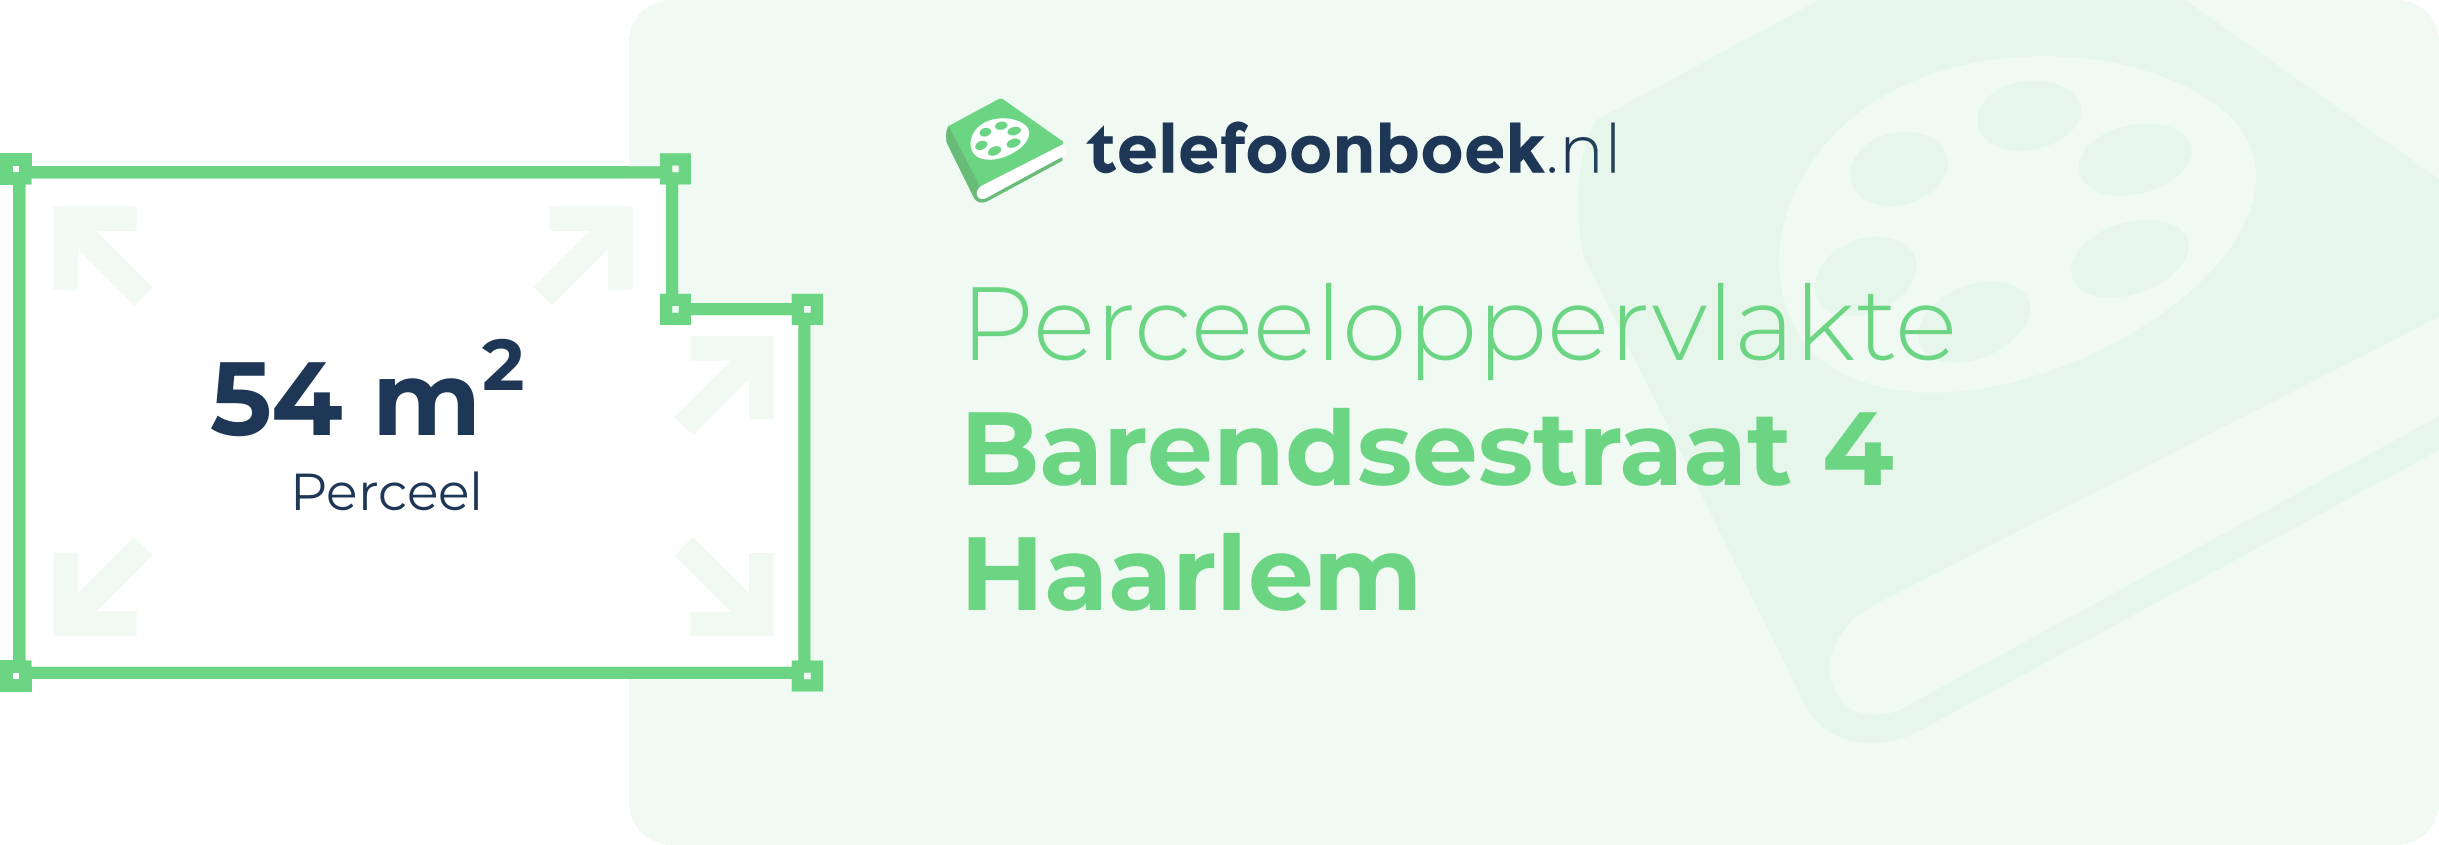 Perceeloppervlakte Barendsestraat 4 Haarlem